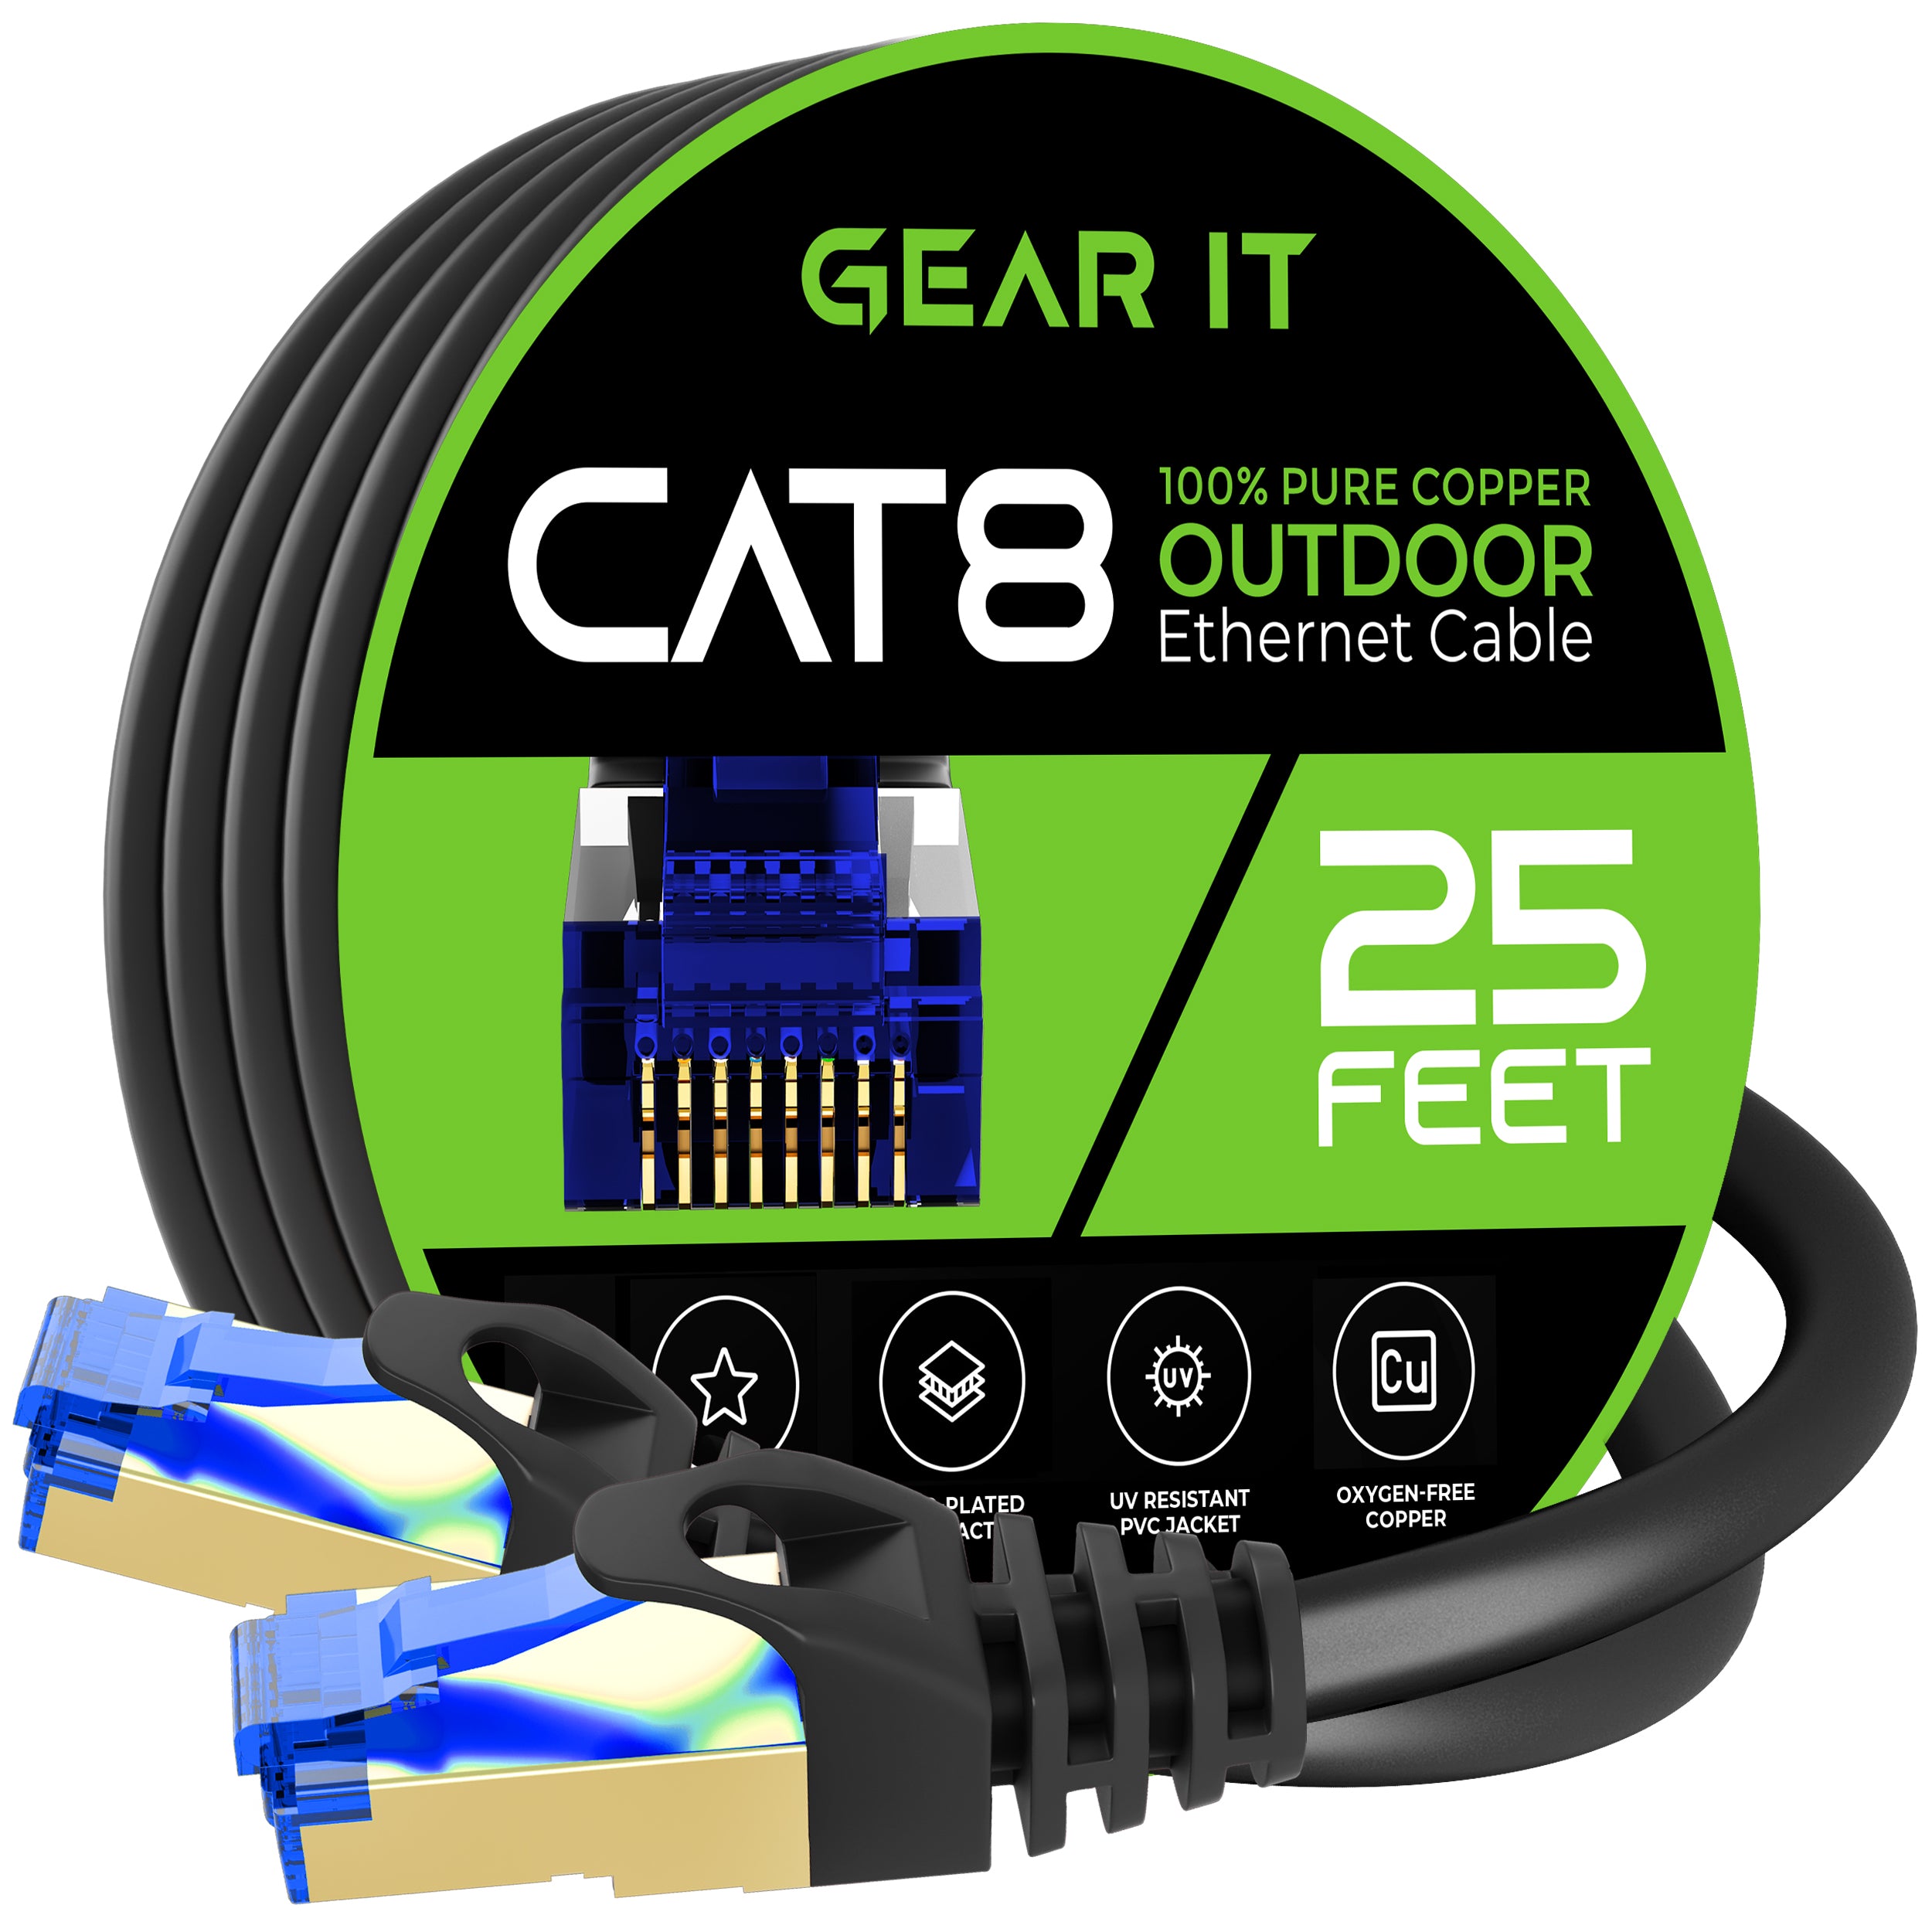 GearIT Cat8 Outdoor Ethernet Cable - Waterproof, Direct Burial, In-Gro